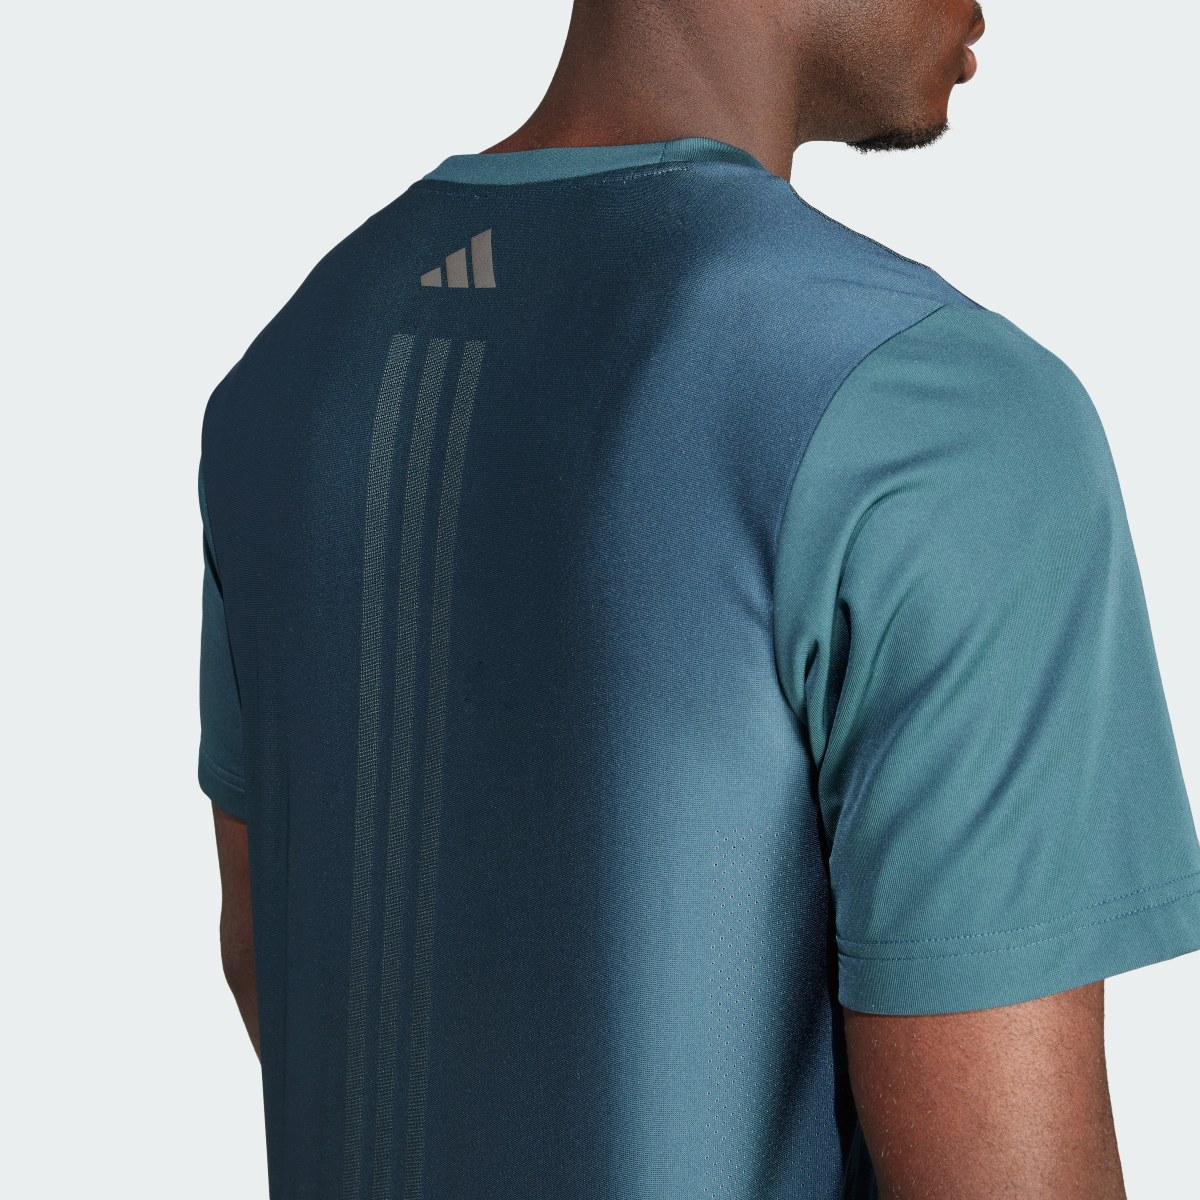 Adidas HIIT Workout 3-Stripes T-Shirt. 7